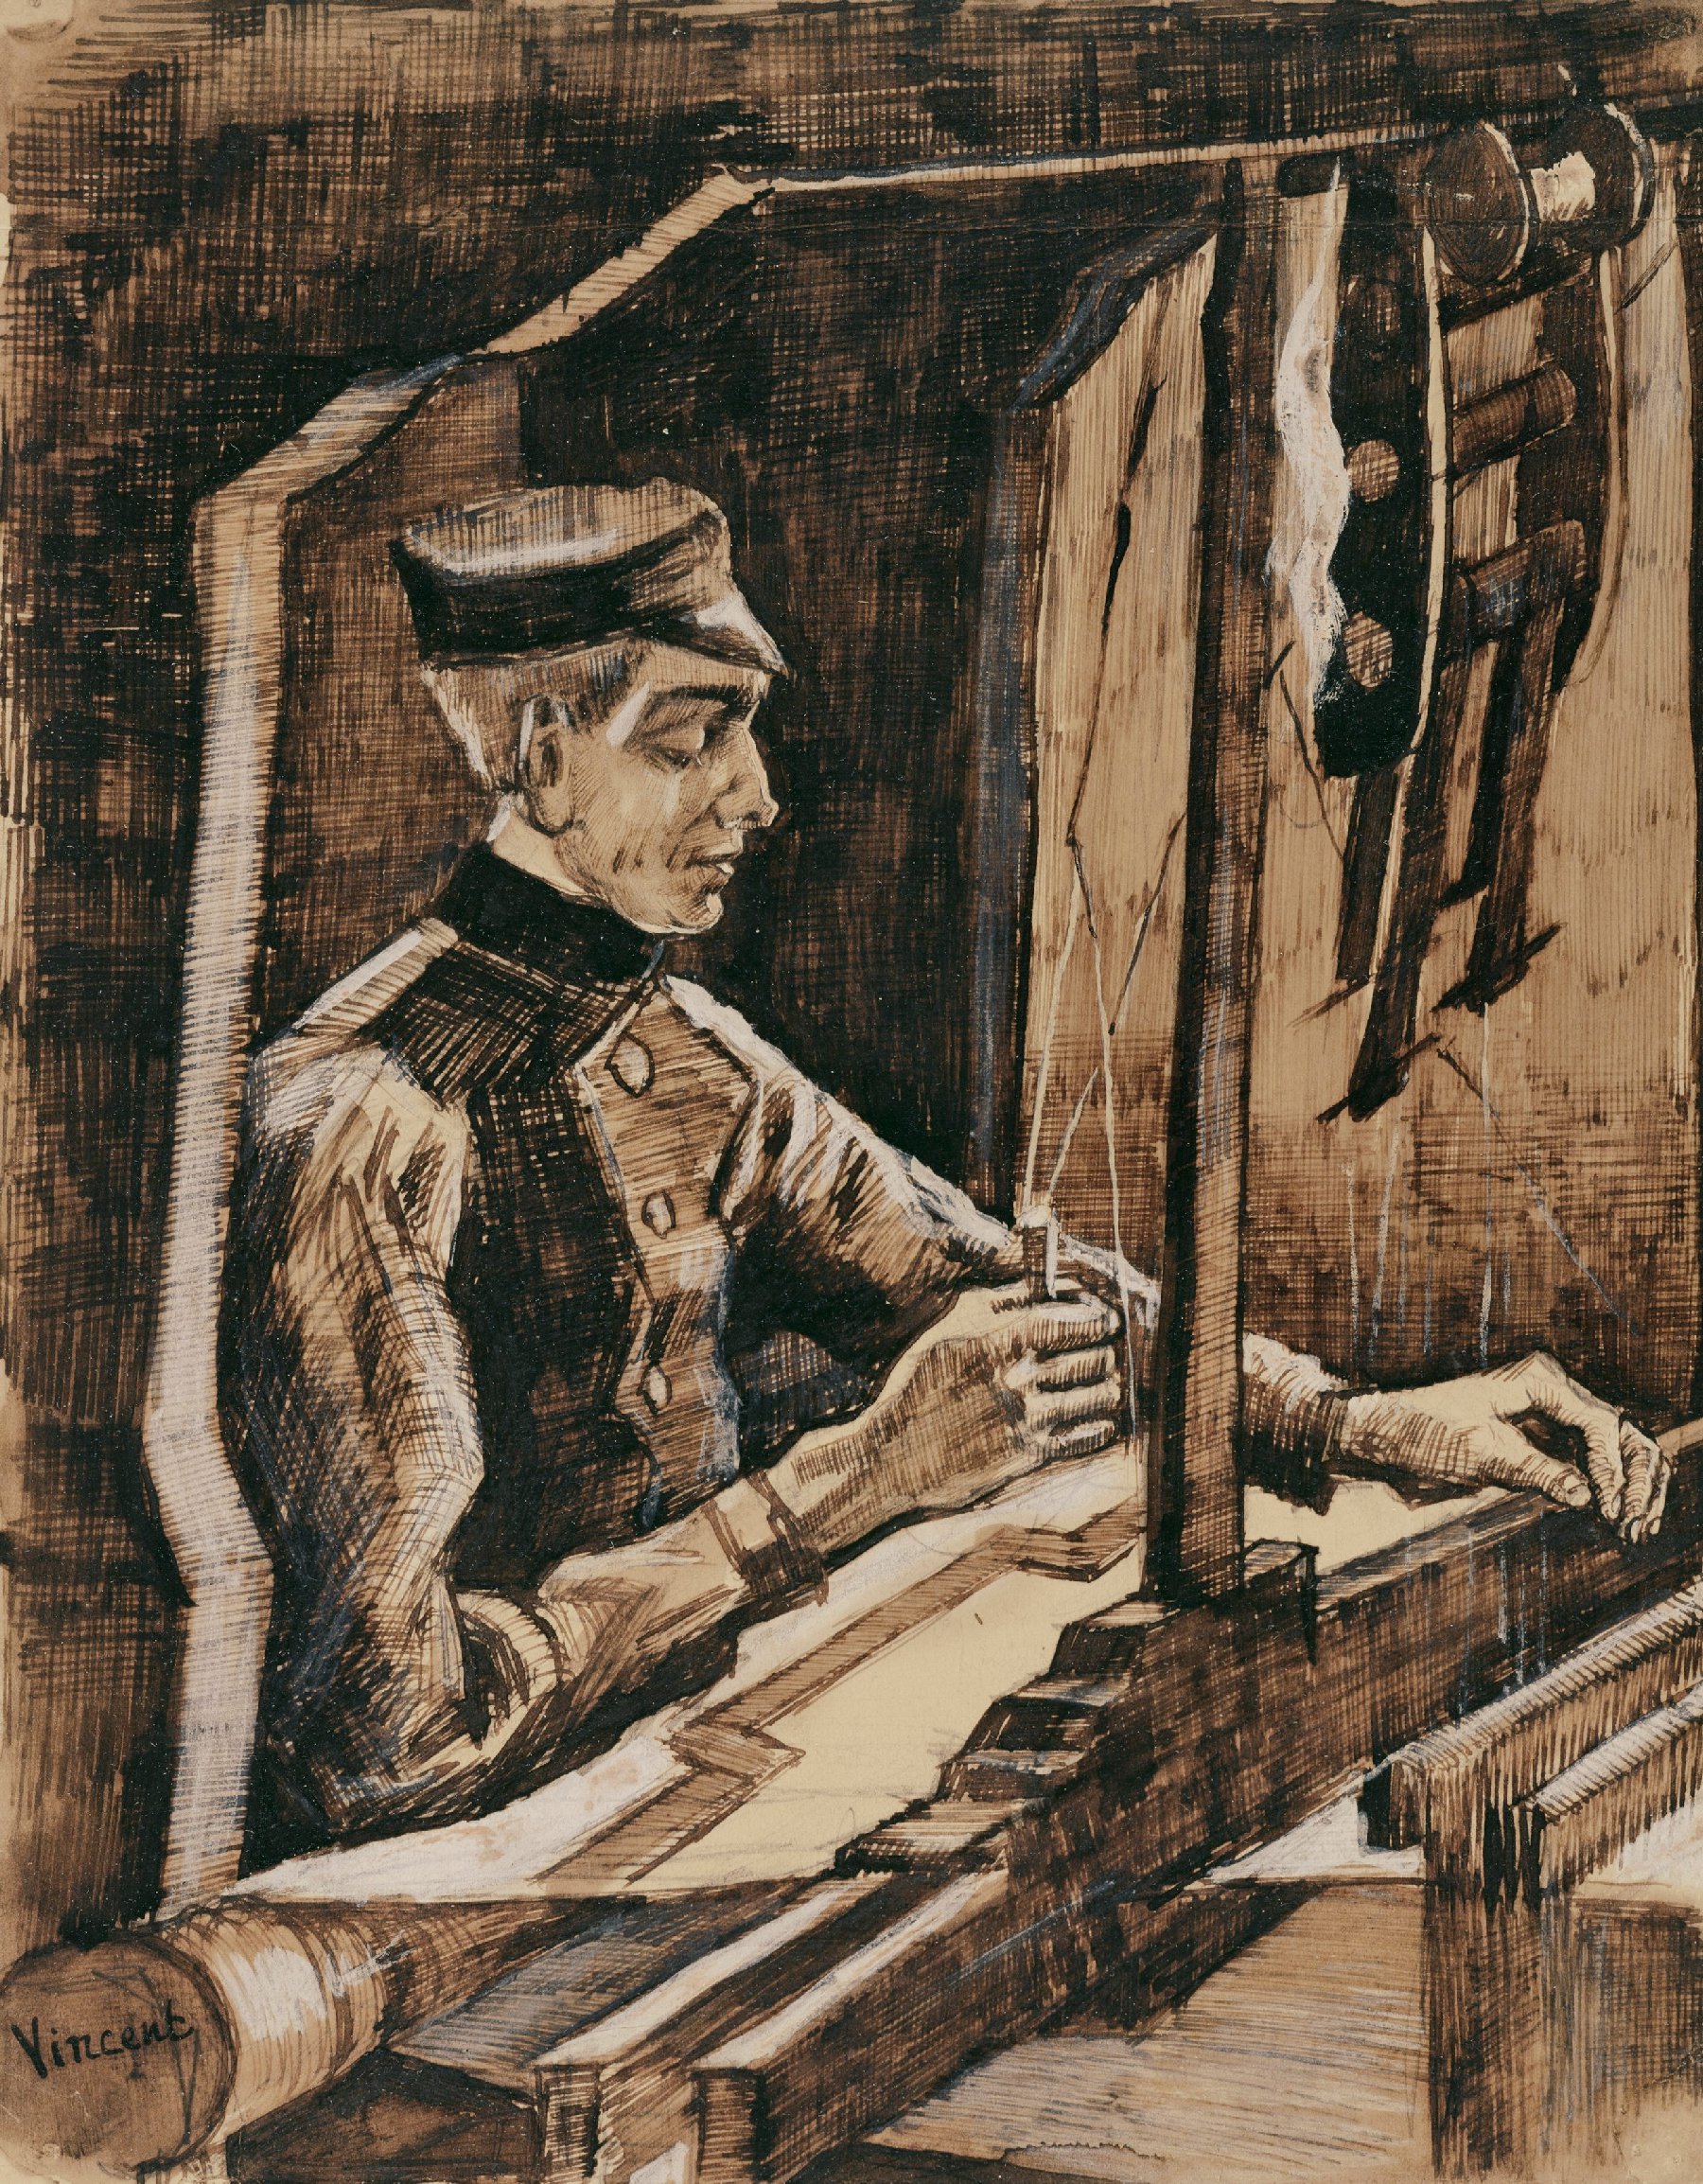 Wever Vincent van Gogh (1853 - 1890), Nuenen, januari 1884